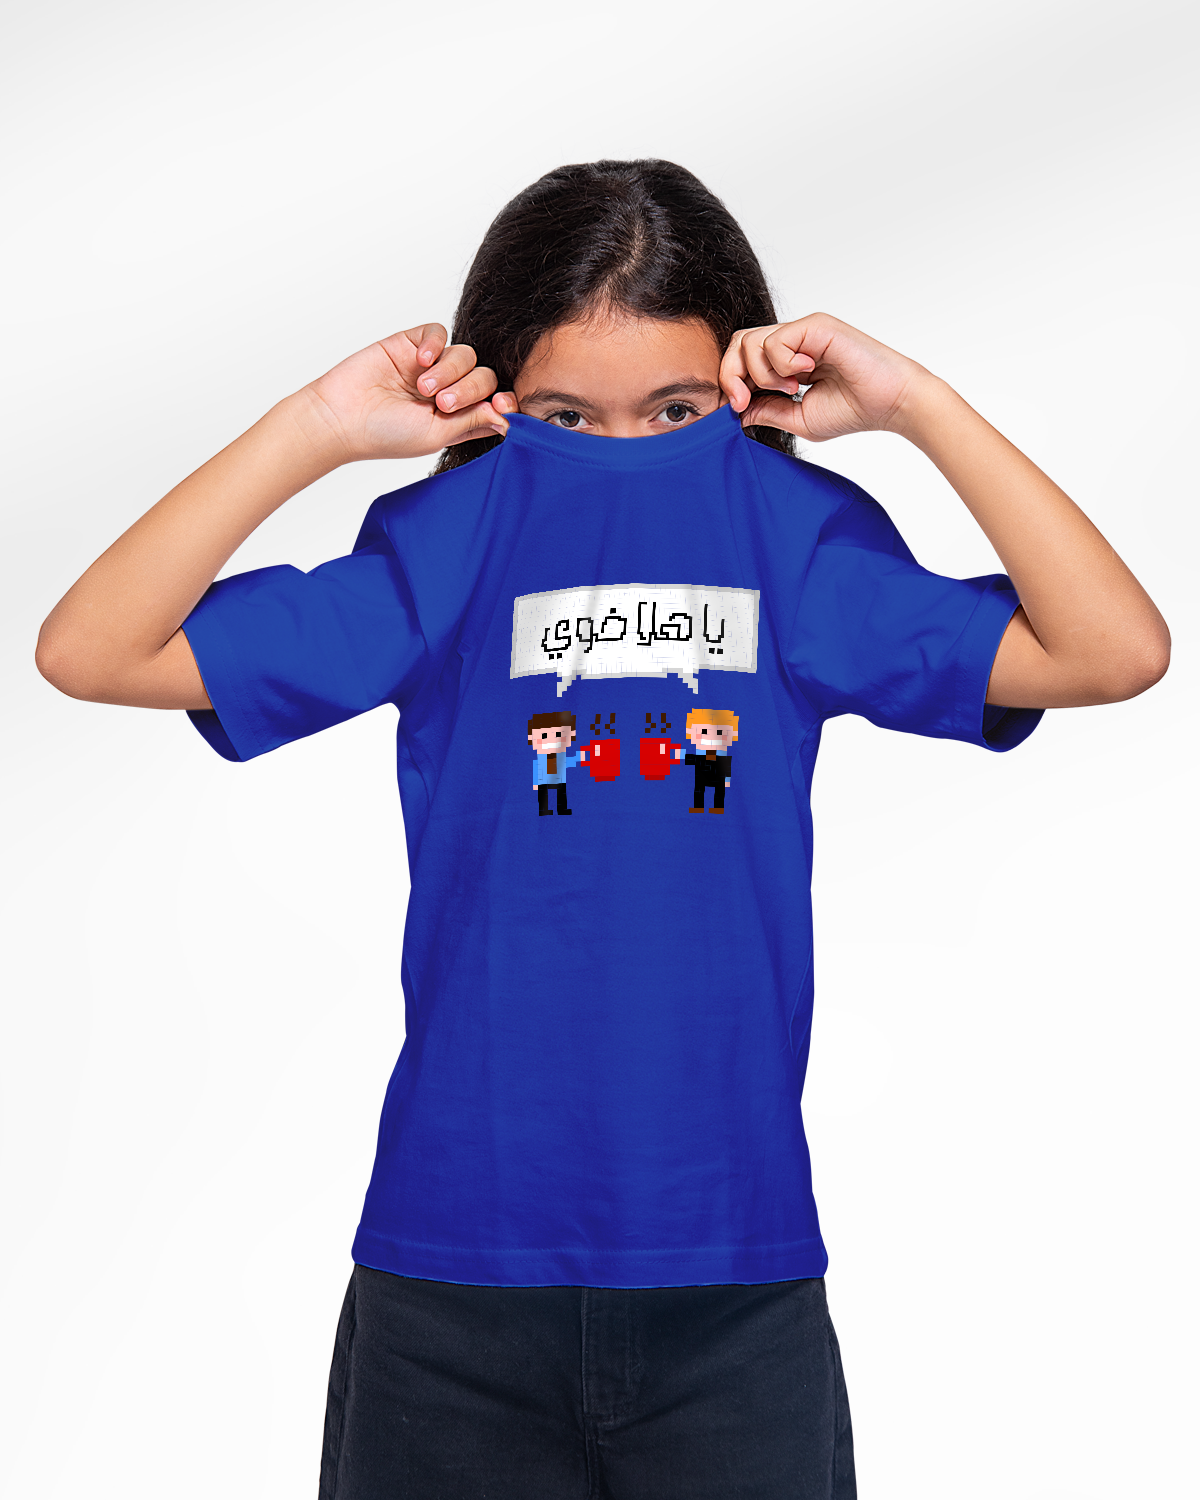 Girls' T-Shirt (يا هلا خوي)